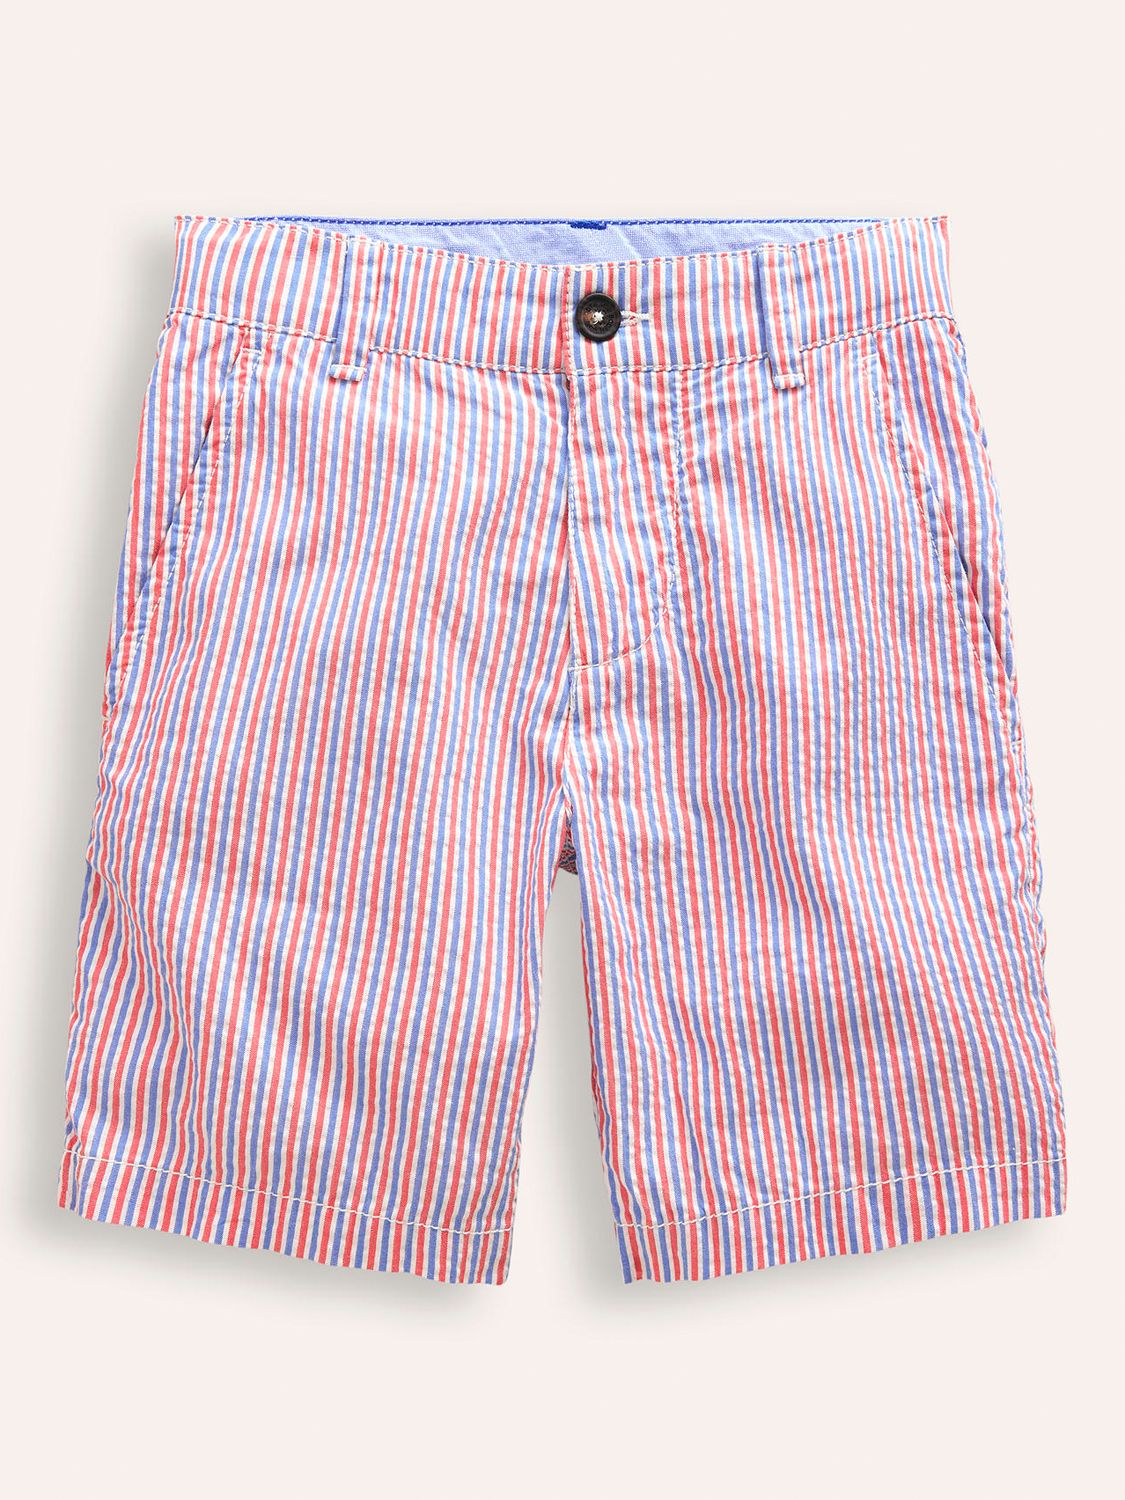 Mini Boden Kids' Seersucker Stripe Chino Shorts, Jam Red/ Blue Stripe, 3 years